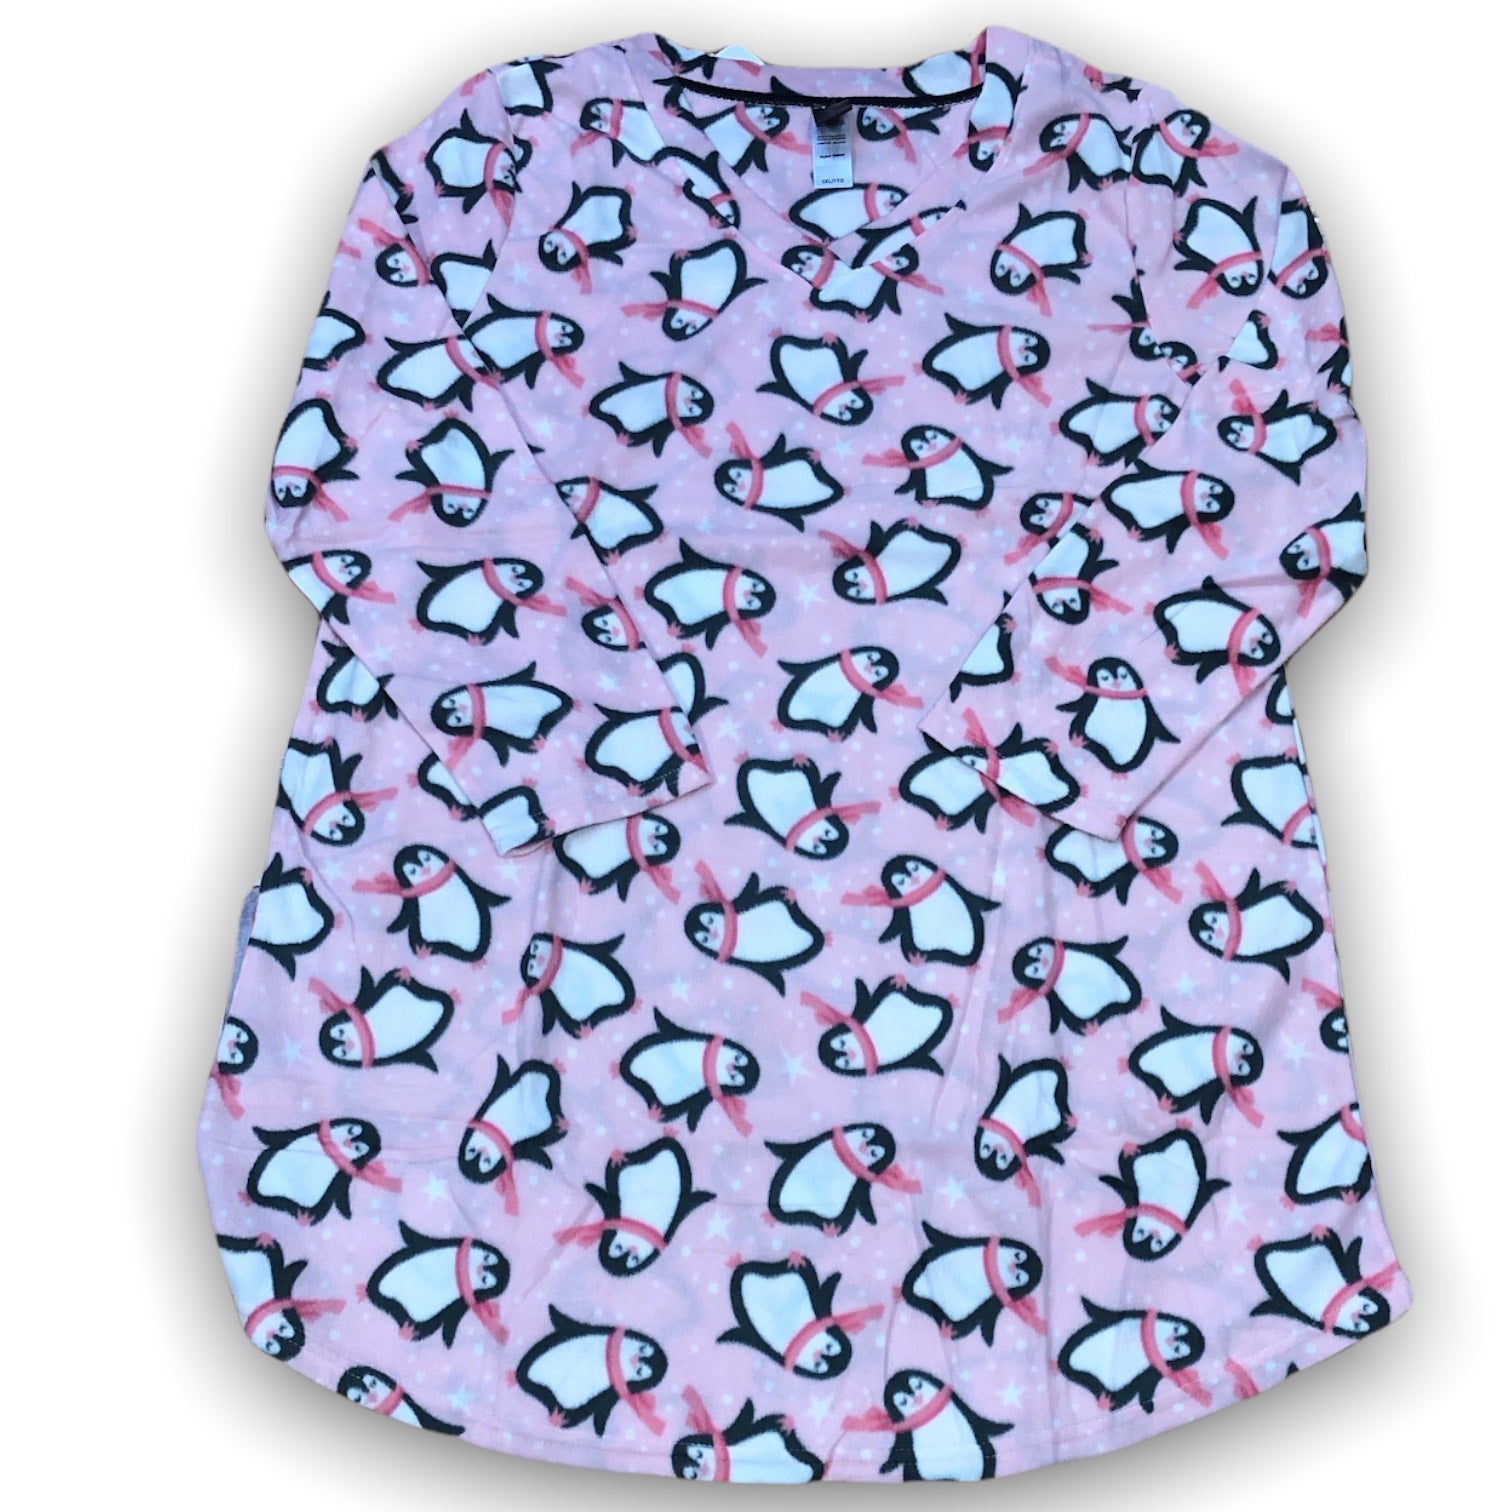 Women's Micropolar Sleepshirt with a Shirttail Hemline